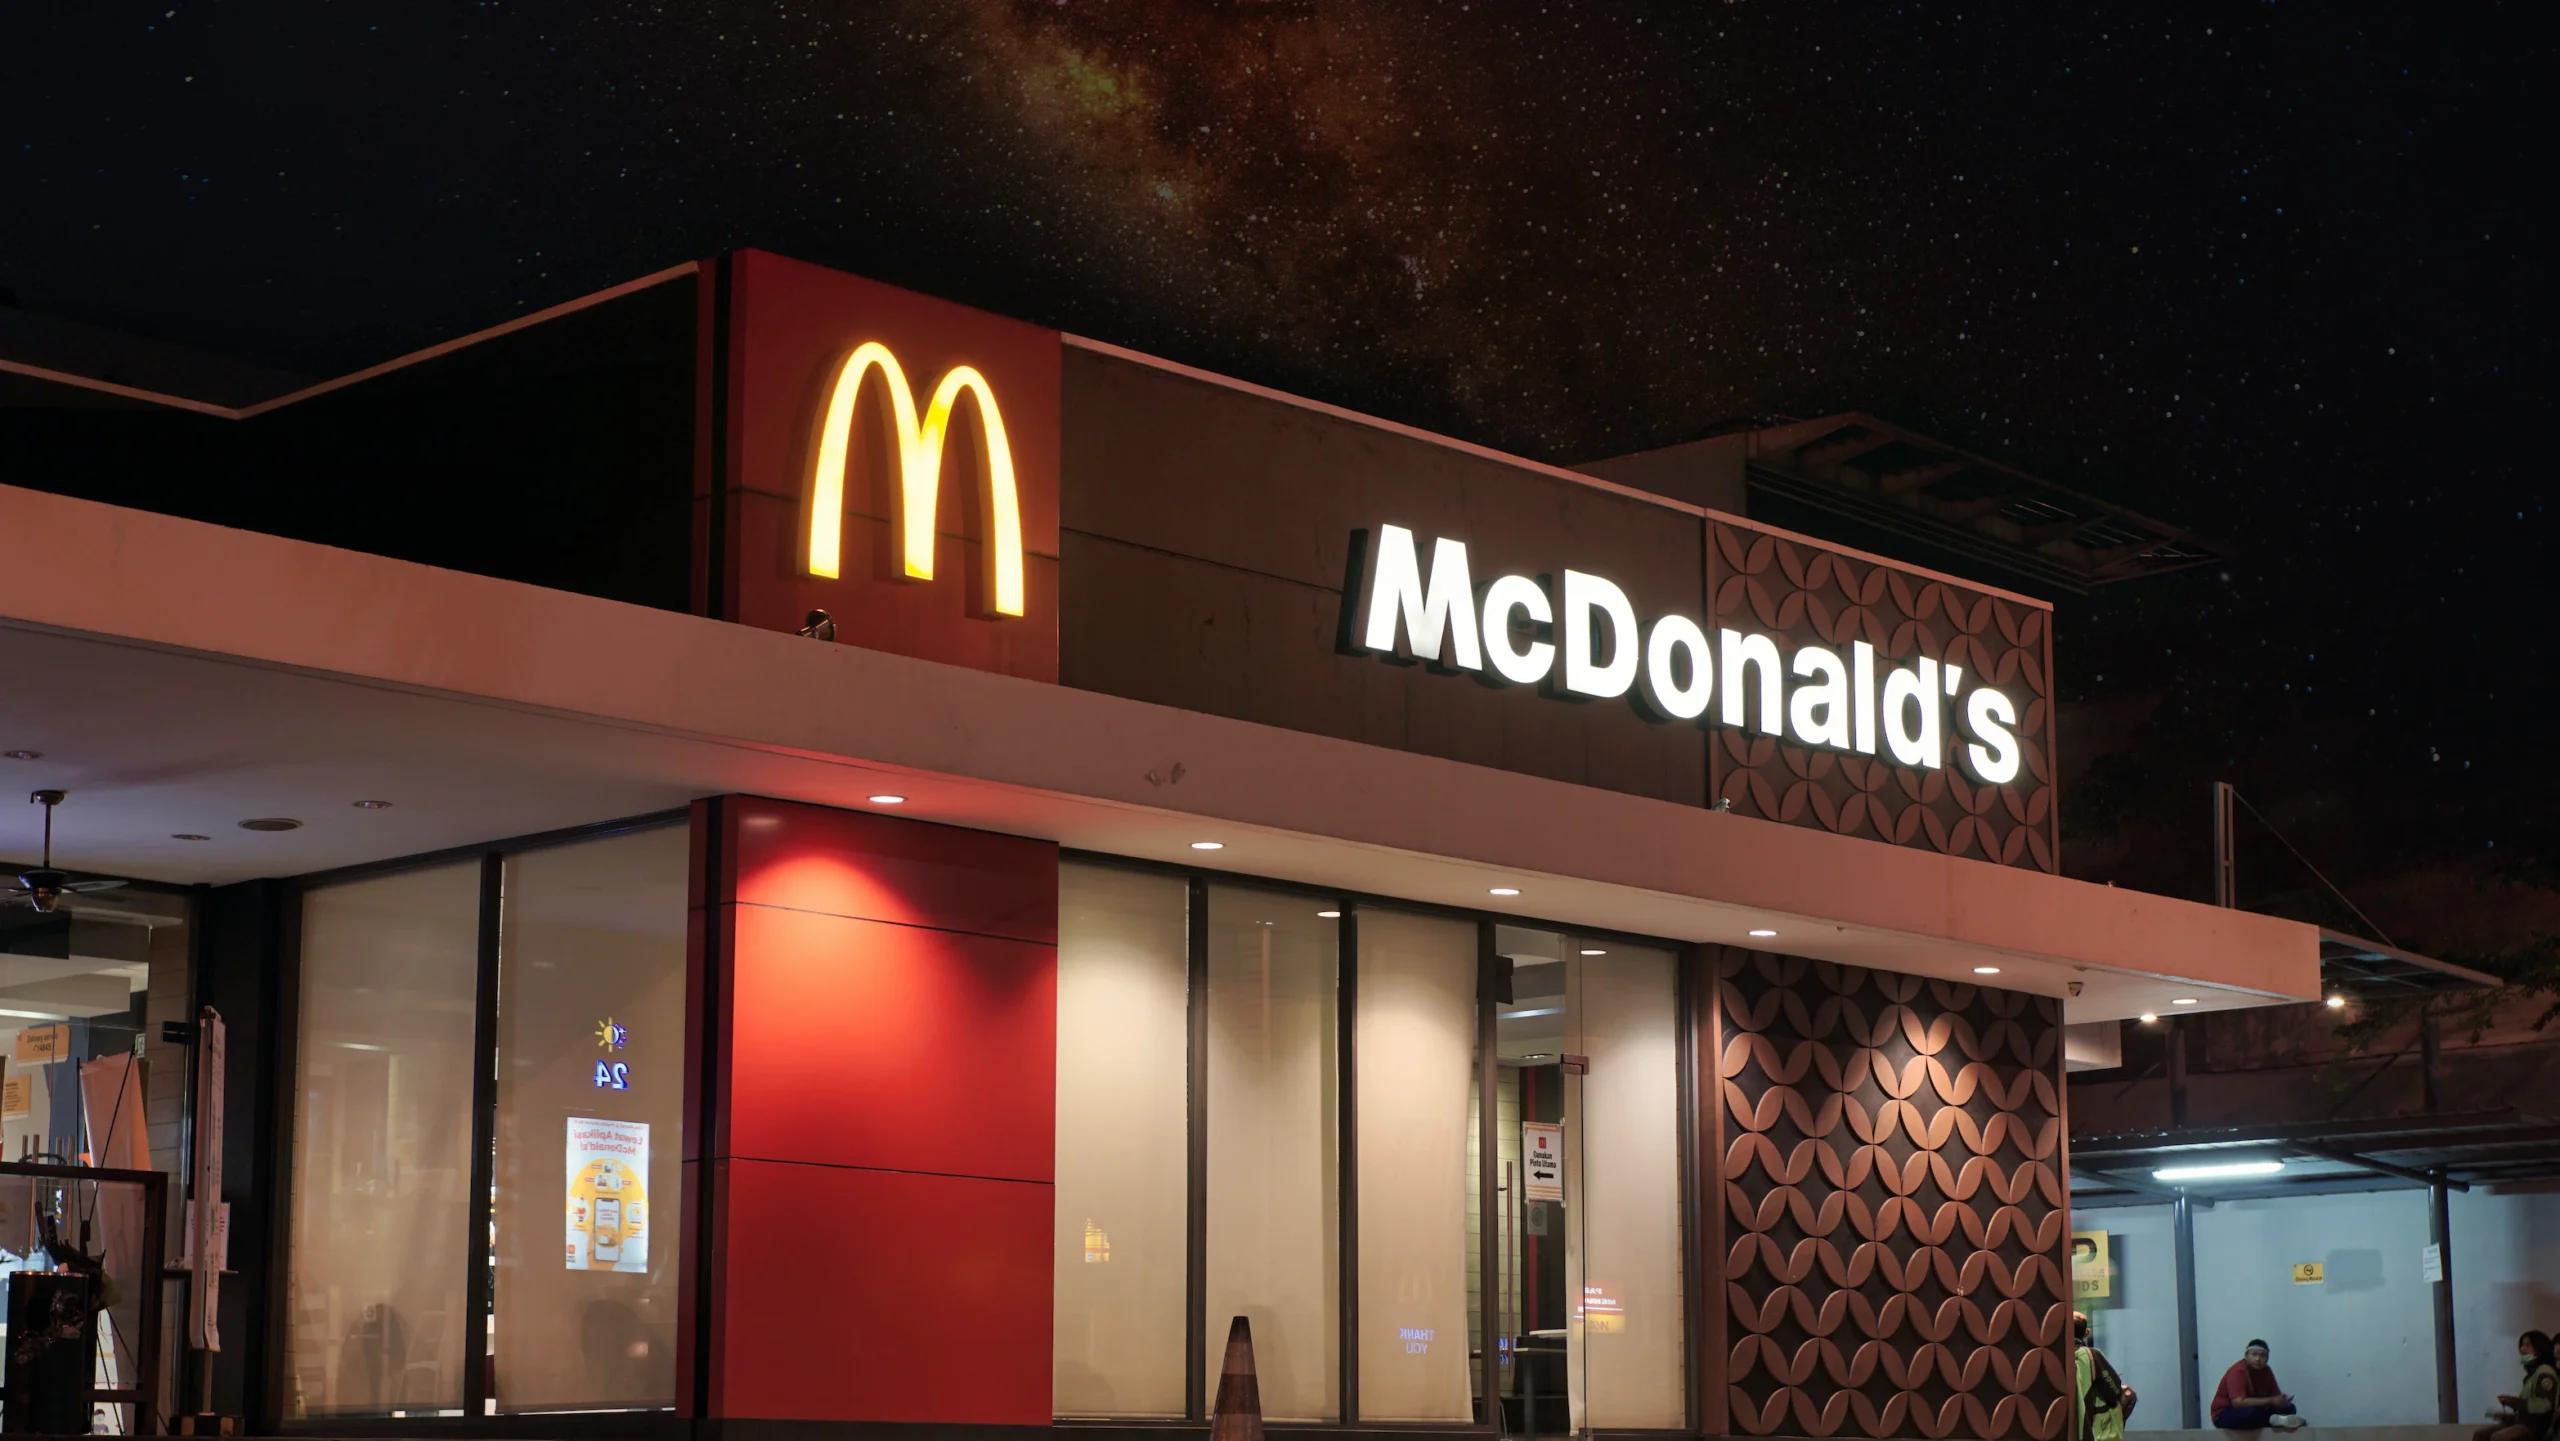 A McDonald's franchise